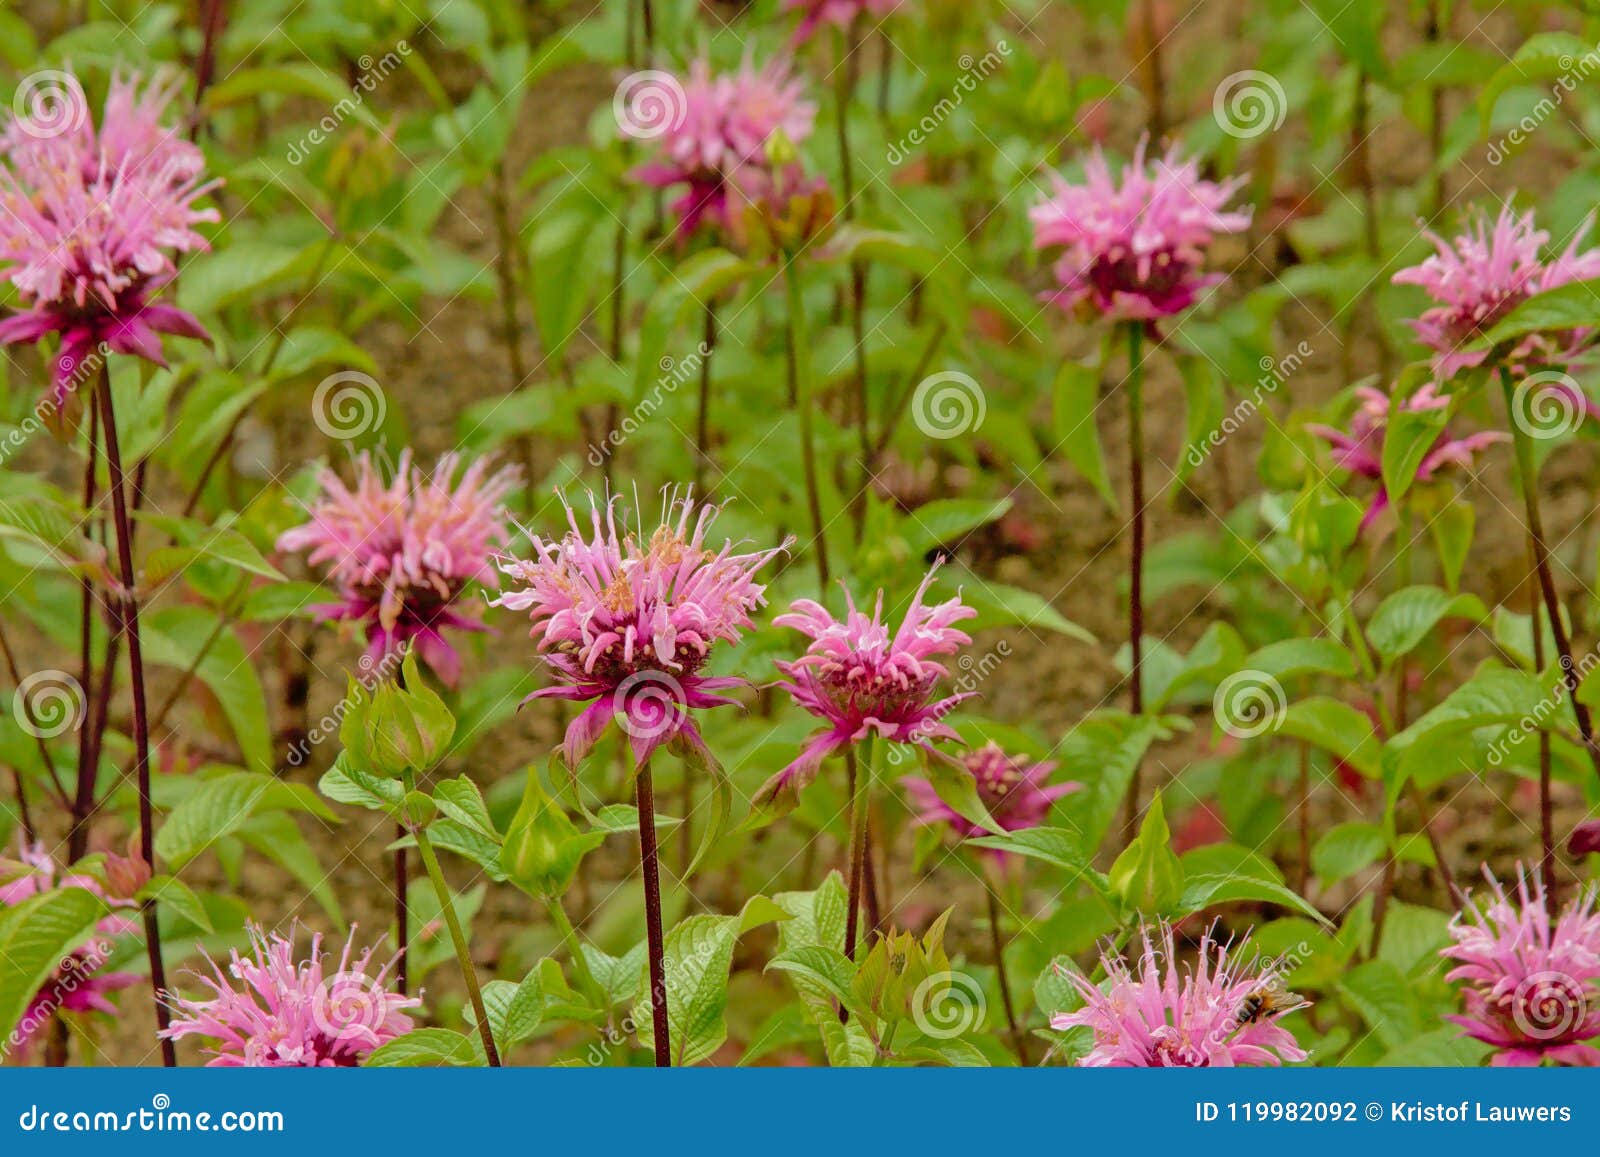 pink wild bergamot flowers - monarda fistulosa